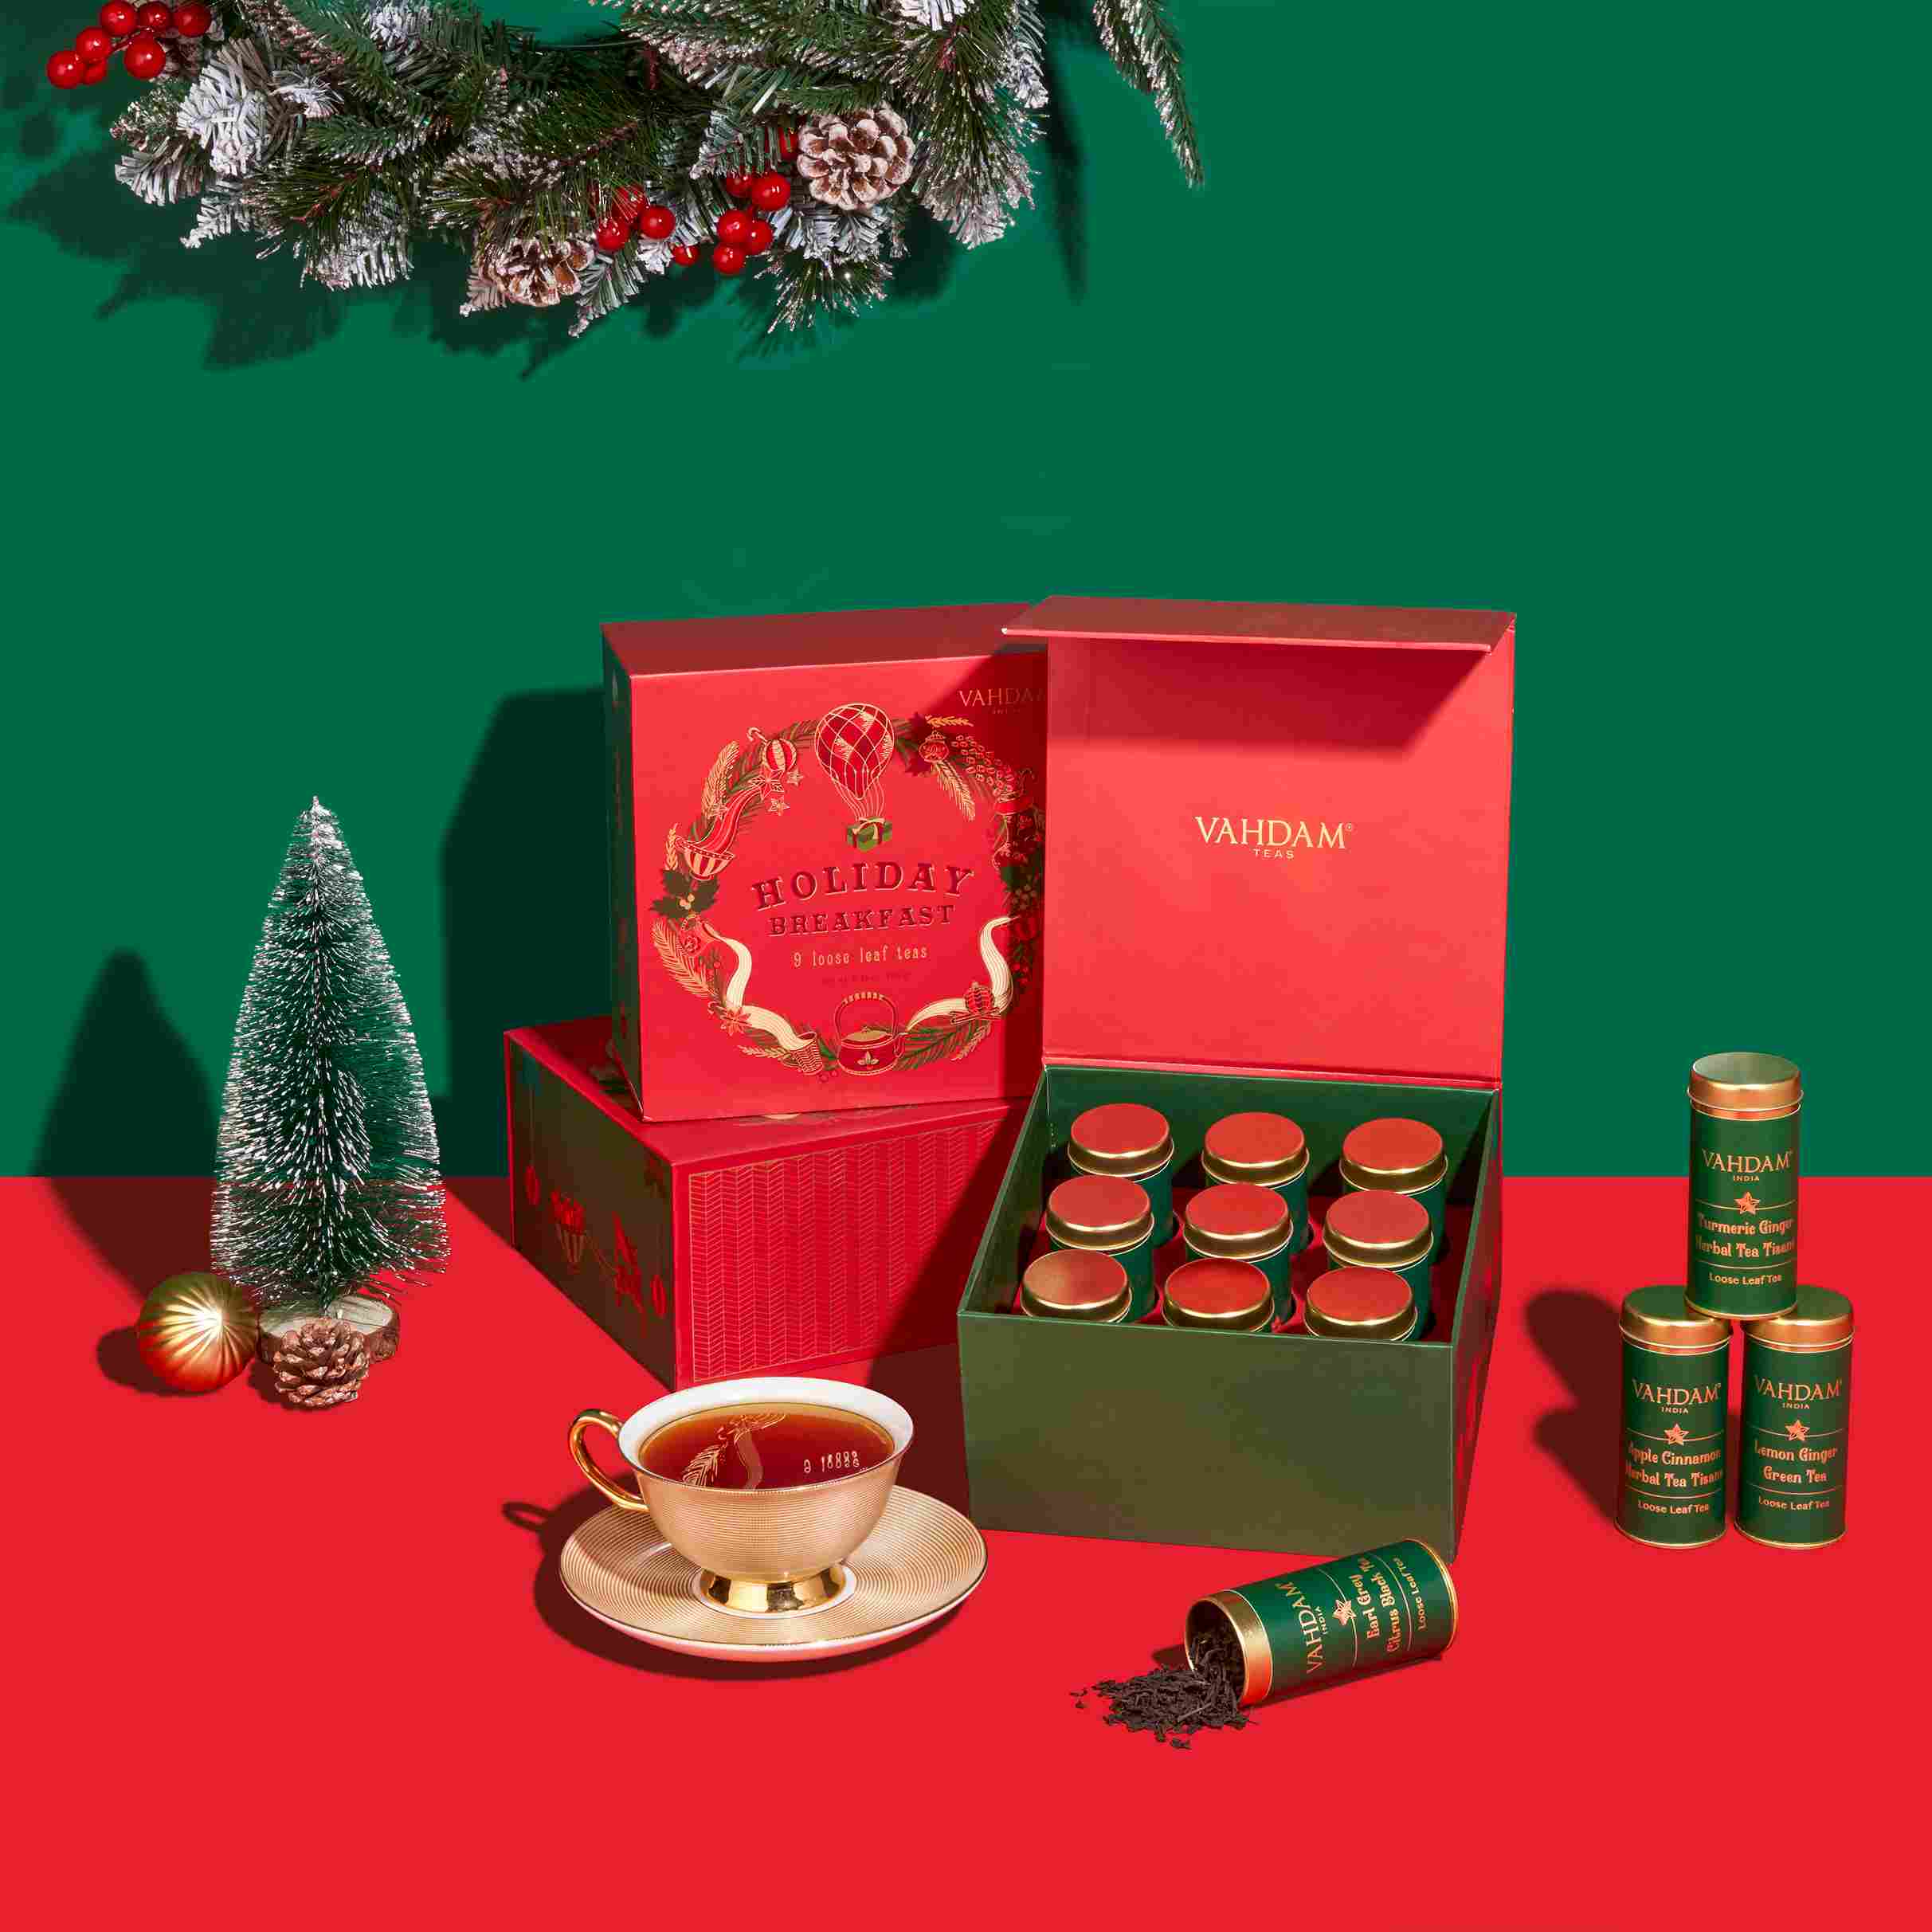 Holiday Breakfast Gift Set - Image 2 - 9 Teas Pack